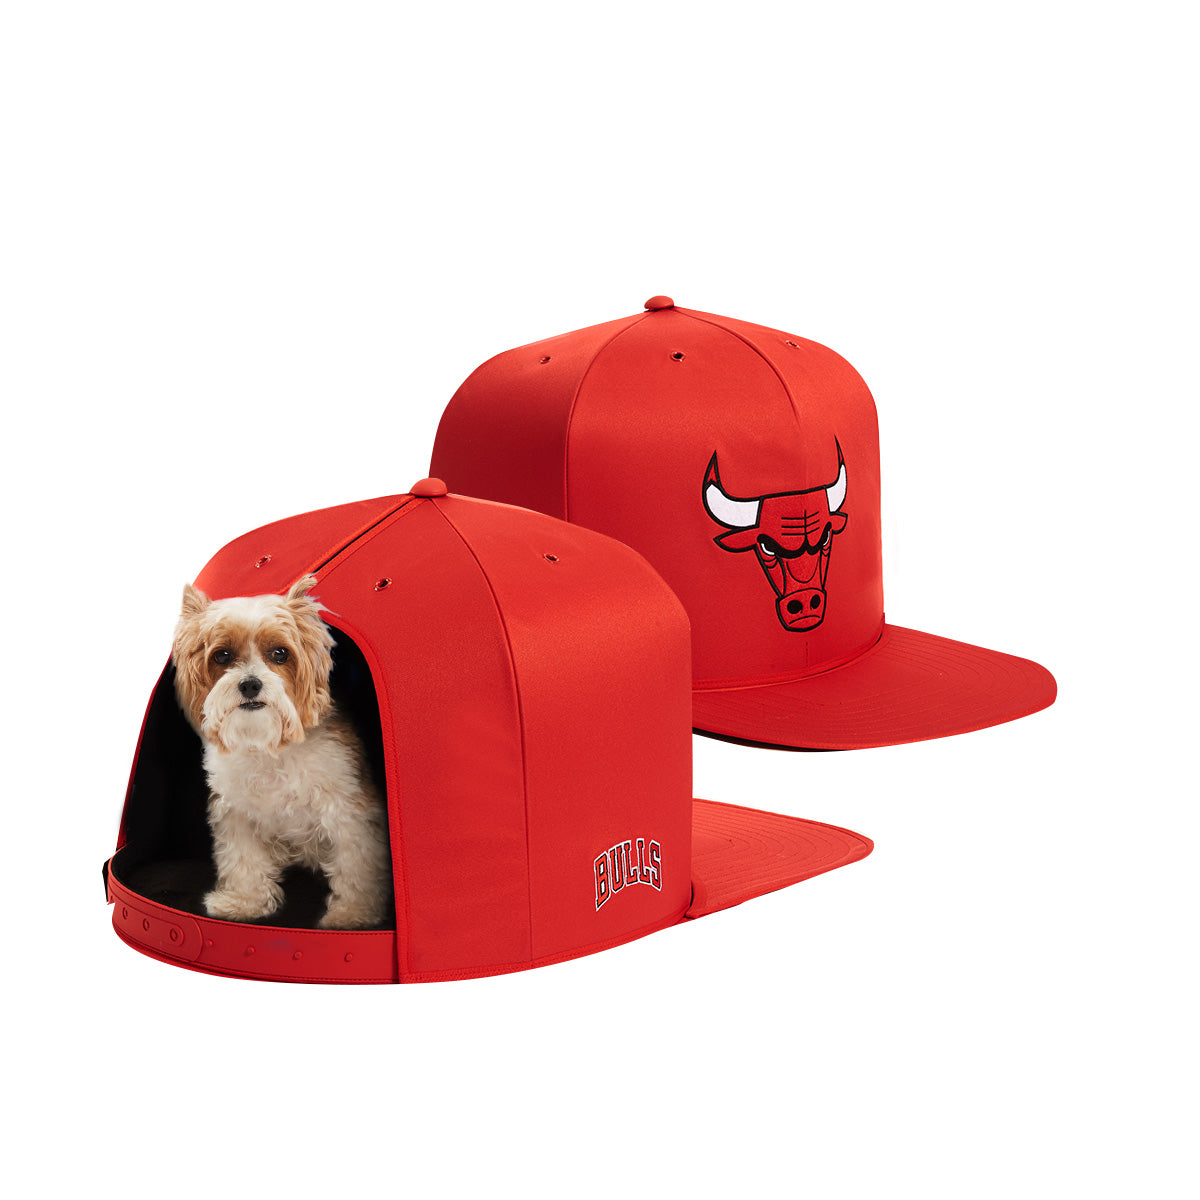 GETFIT Dog Baseball Cap Leisure Cool Cotton Breathable Adjustable